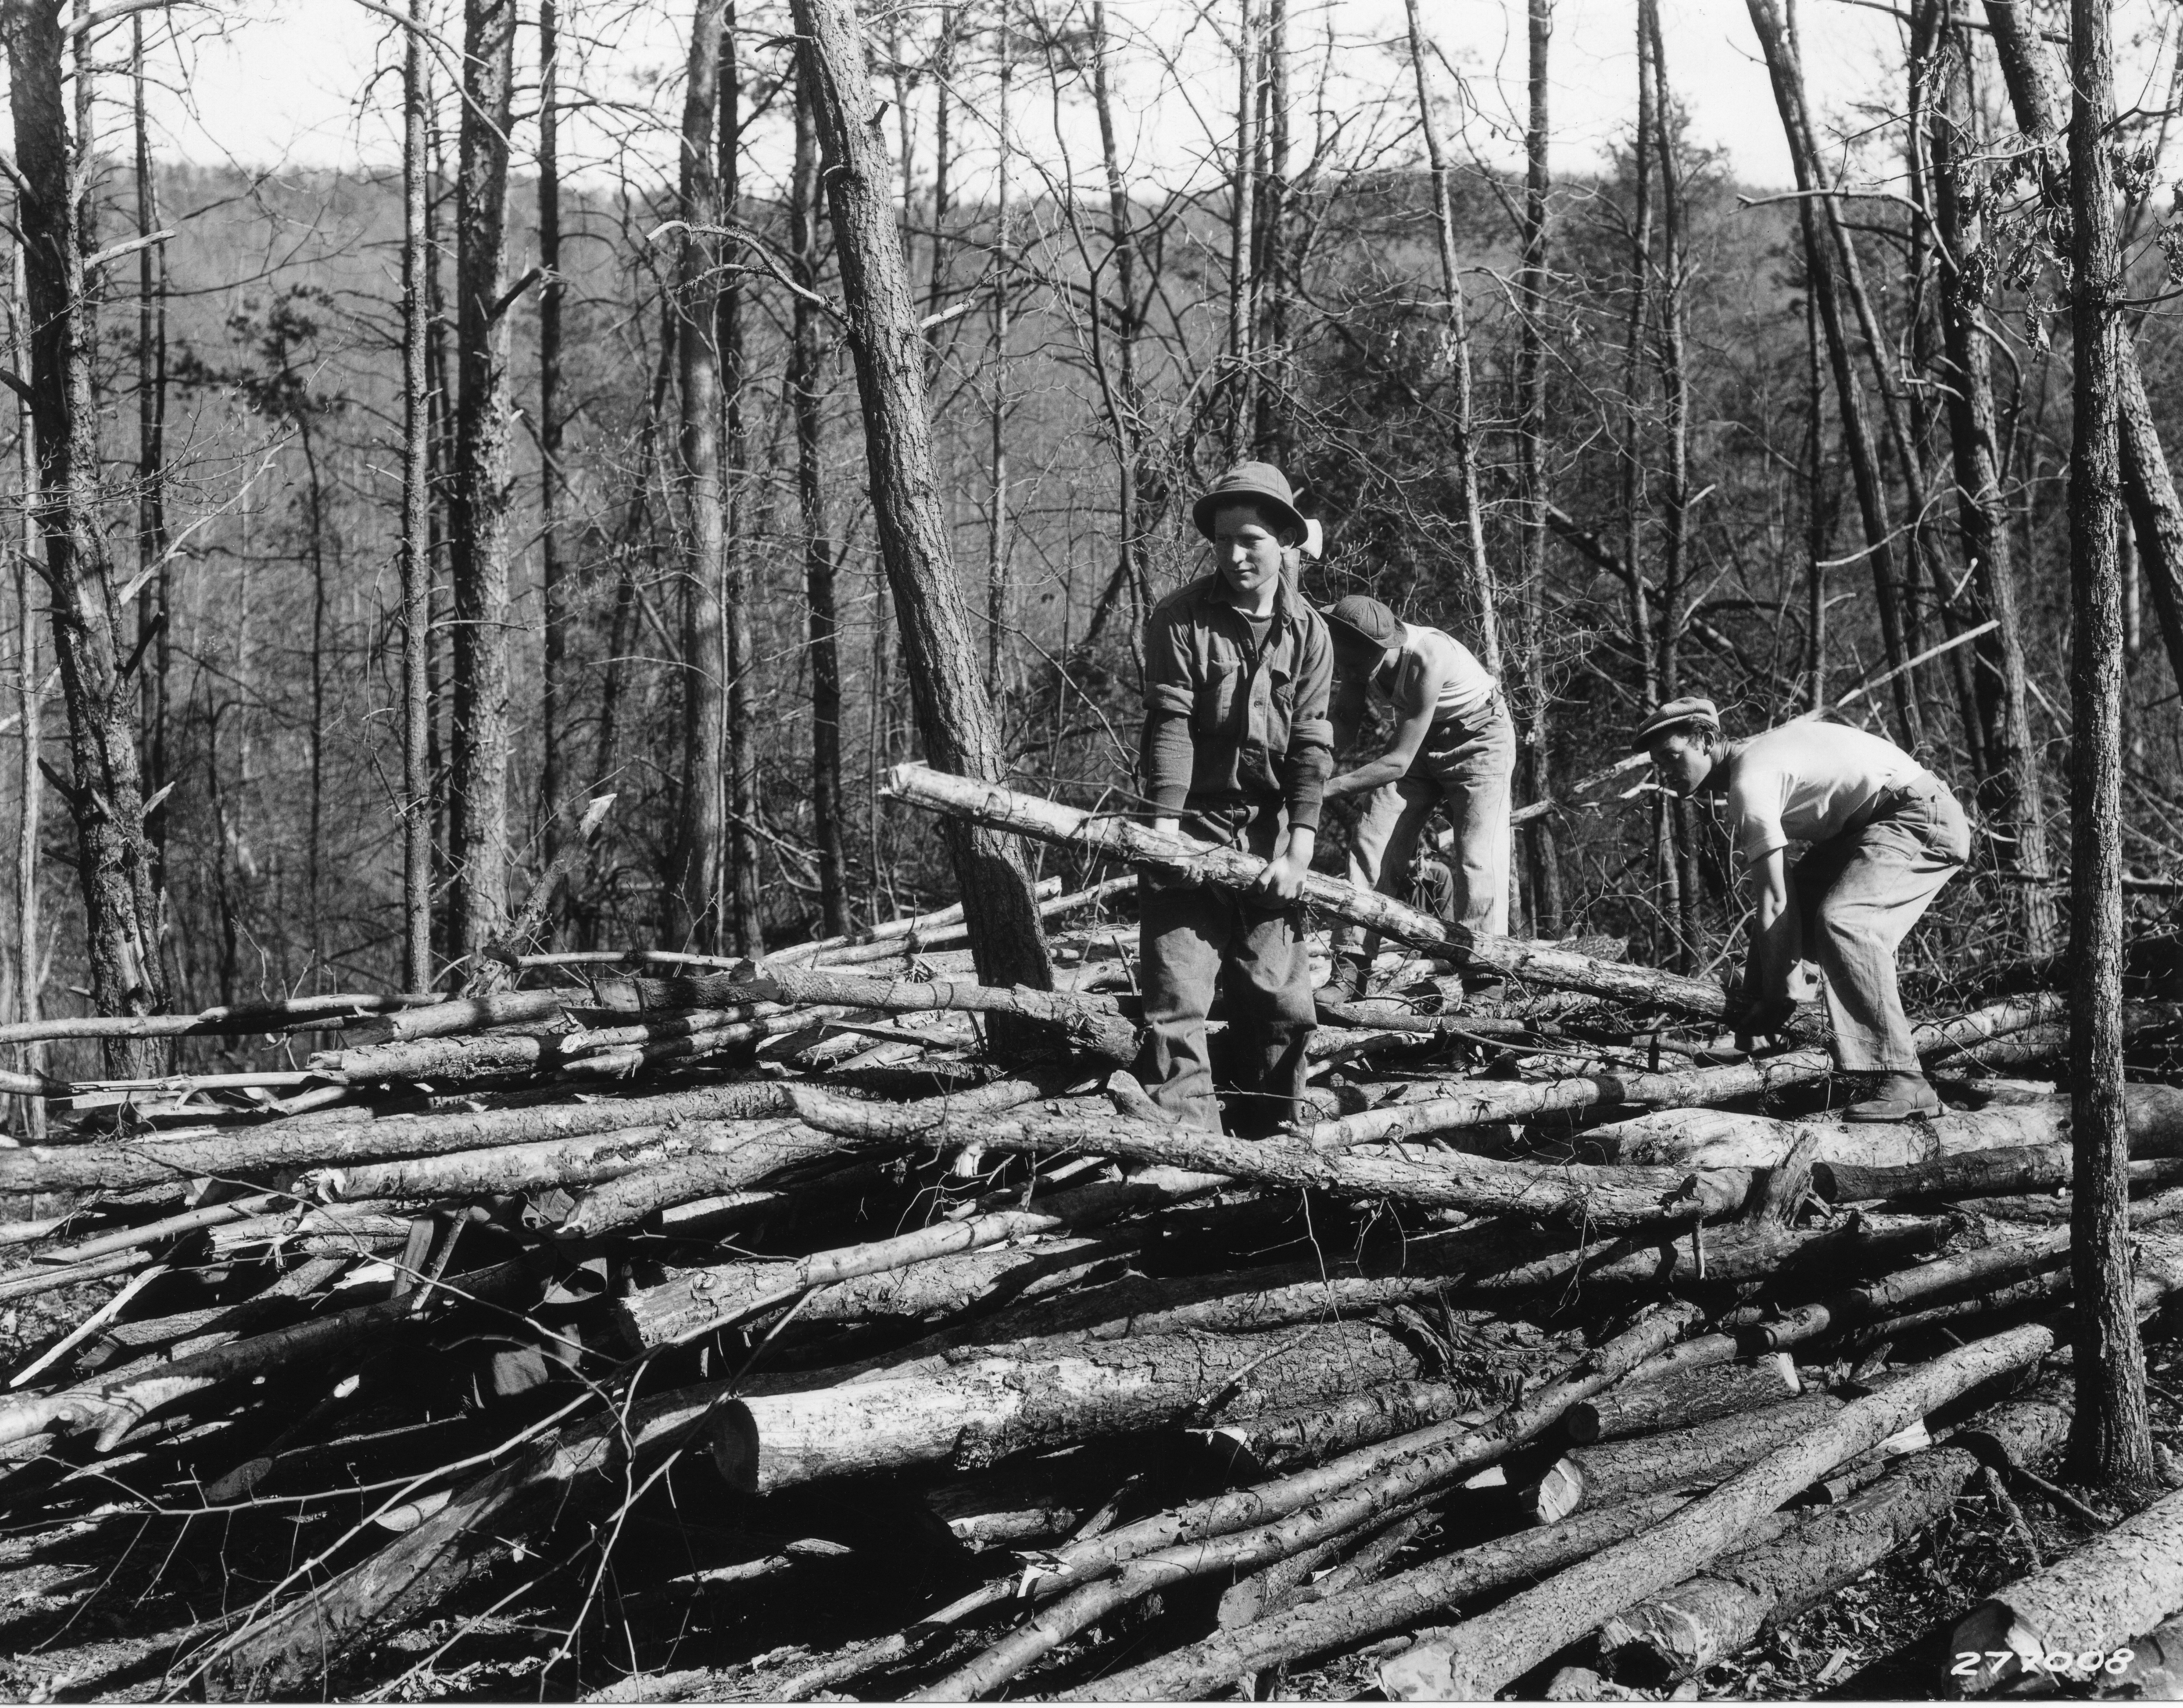 Piling up poles, Camp Roosevelt, George Washington National Forest, Virginia (3226943004)